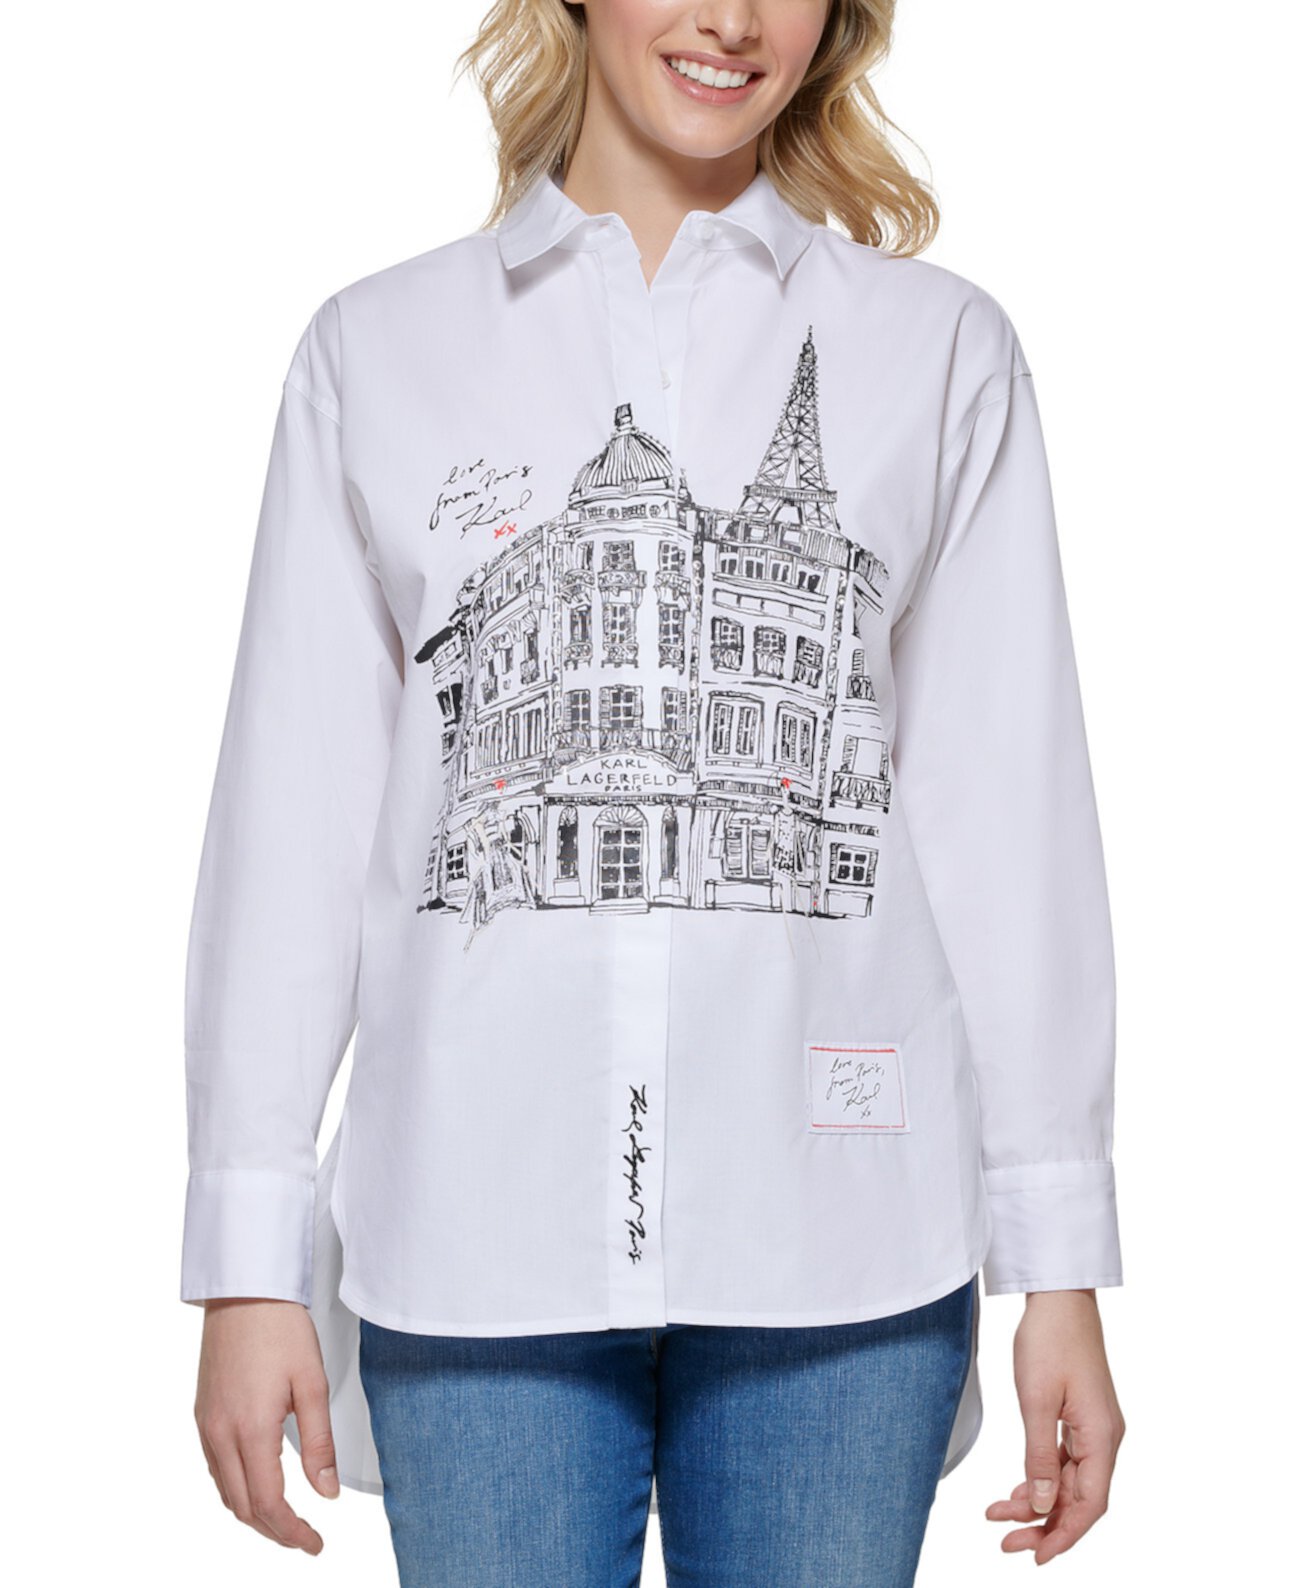 Парижская рубашка с пейзажем Karl Lagerfeld Paris